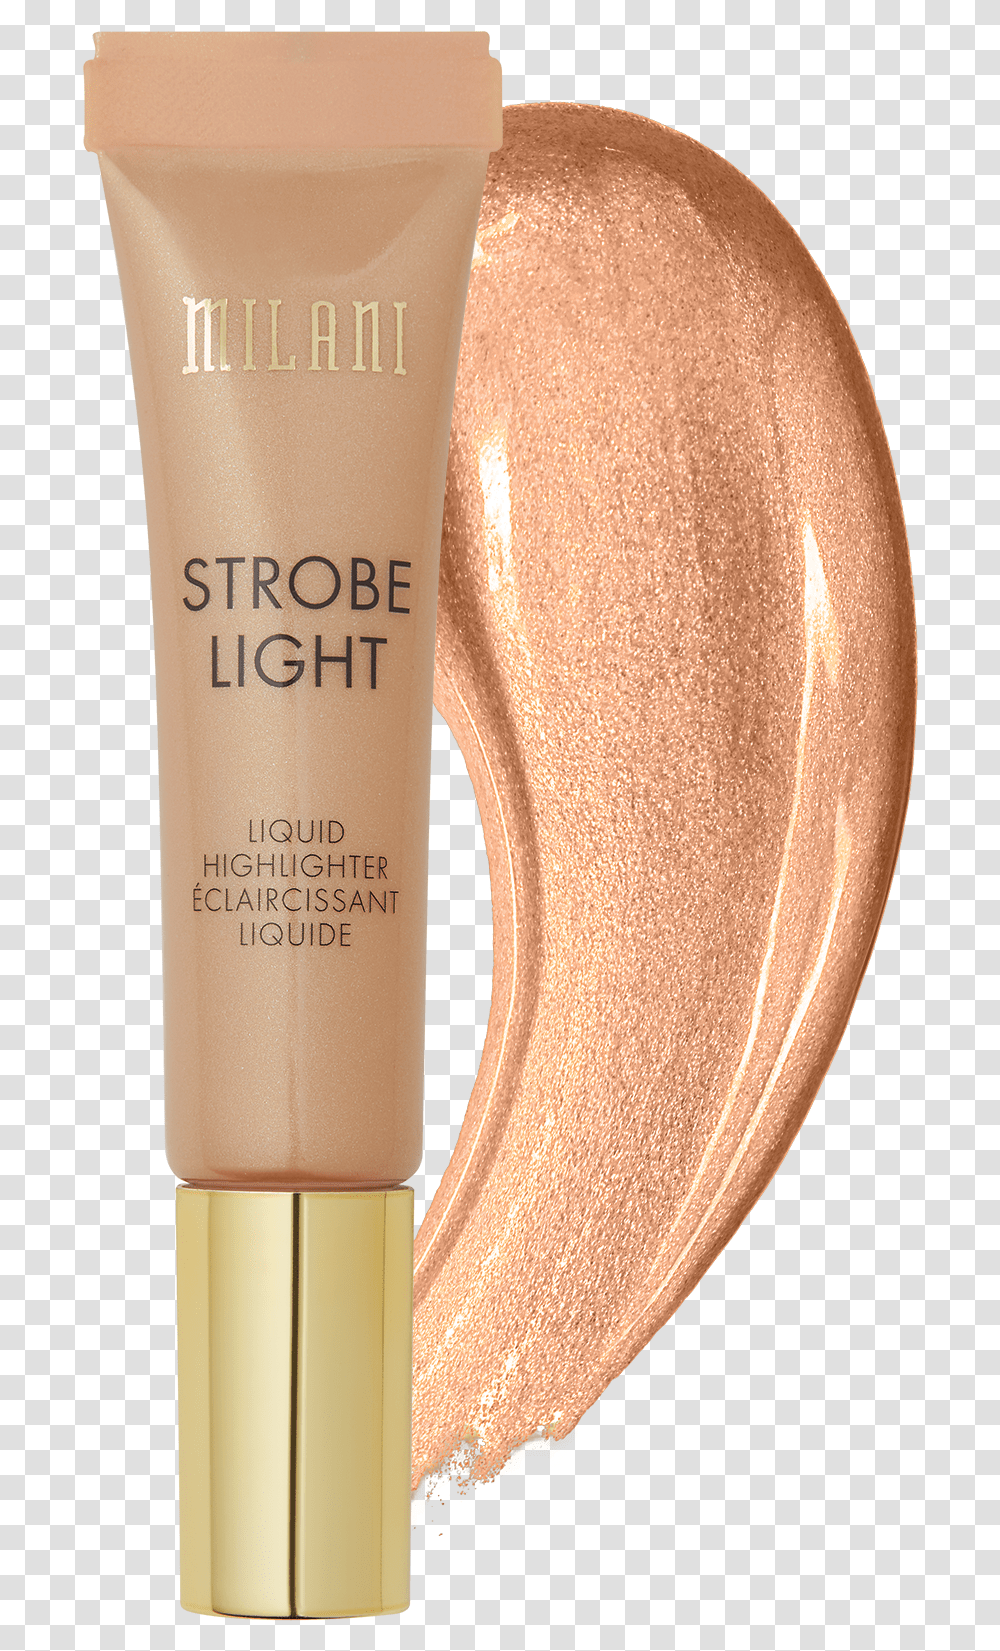 Strobe Light Liquid Highlighter Milani Strobe Light Liquid Highlighter Day Glow, Cosmetics, Bottle, Face Makeup Transparent Png